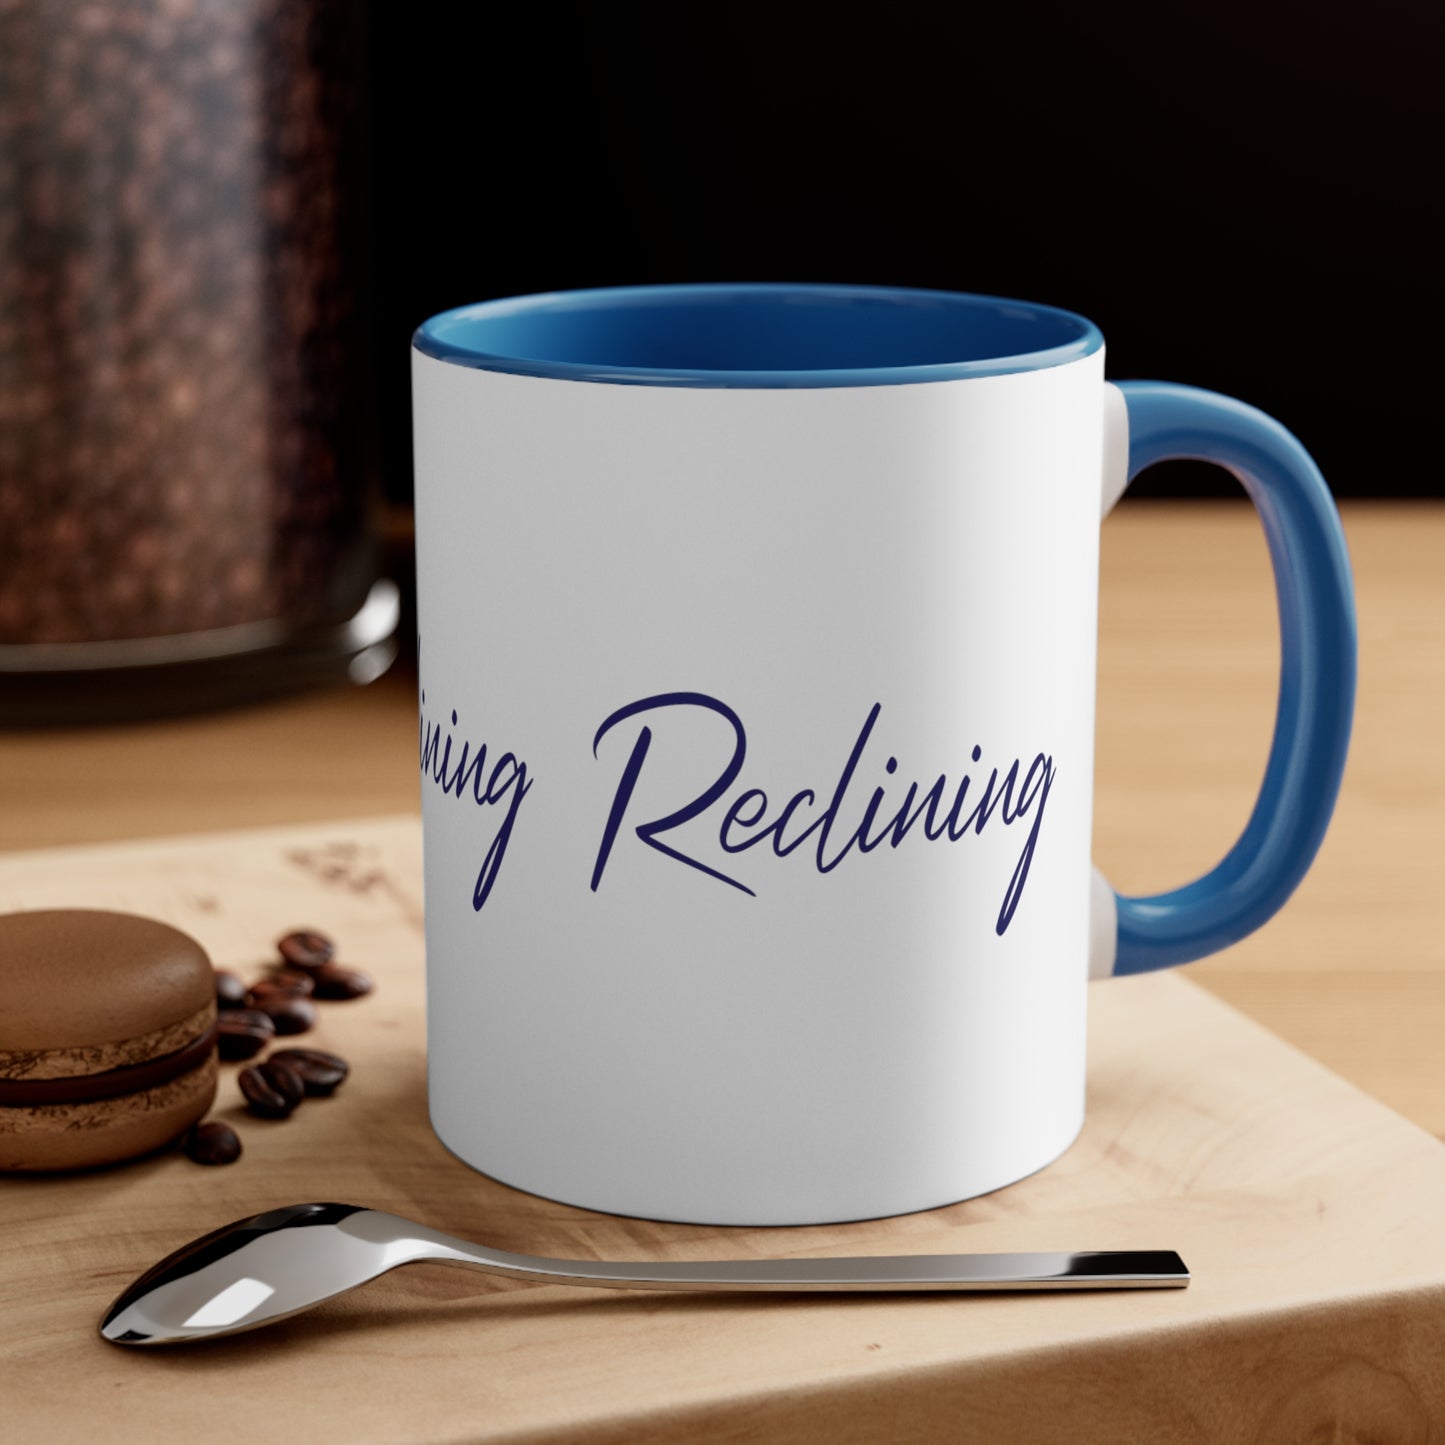 Accent Coffee Mug, 11oz - "Reclining" - Design 055 - Home Sweet Home